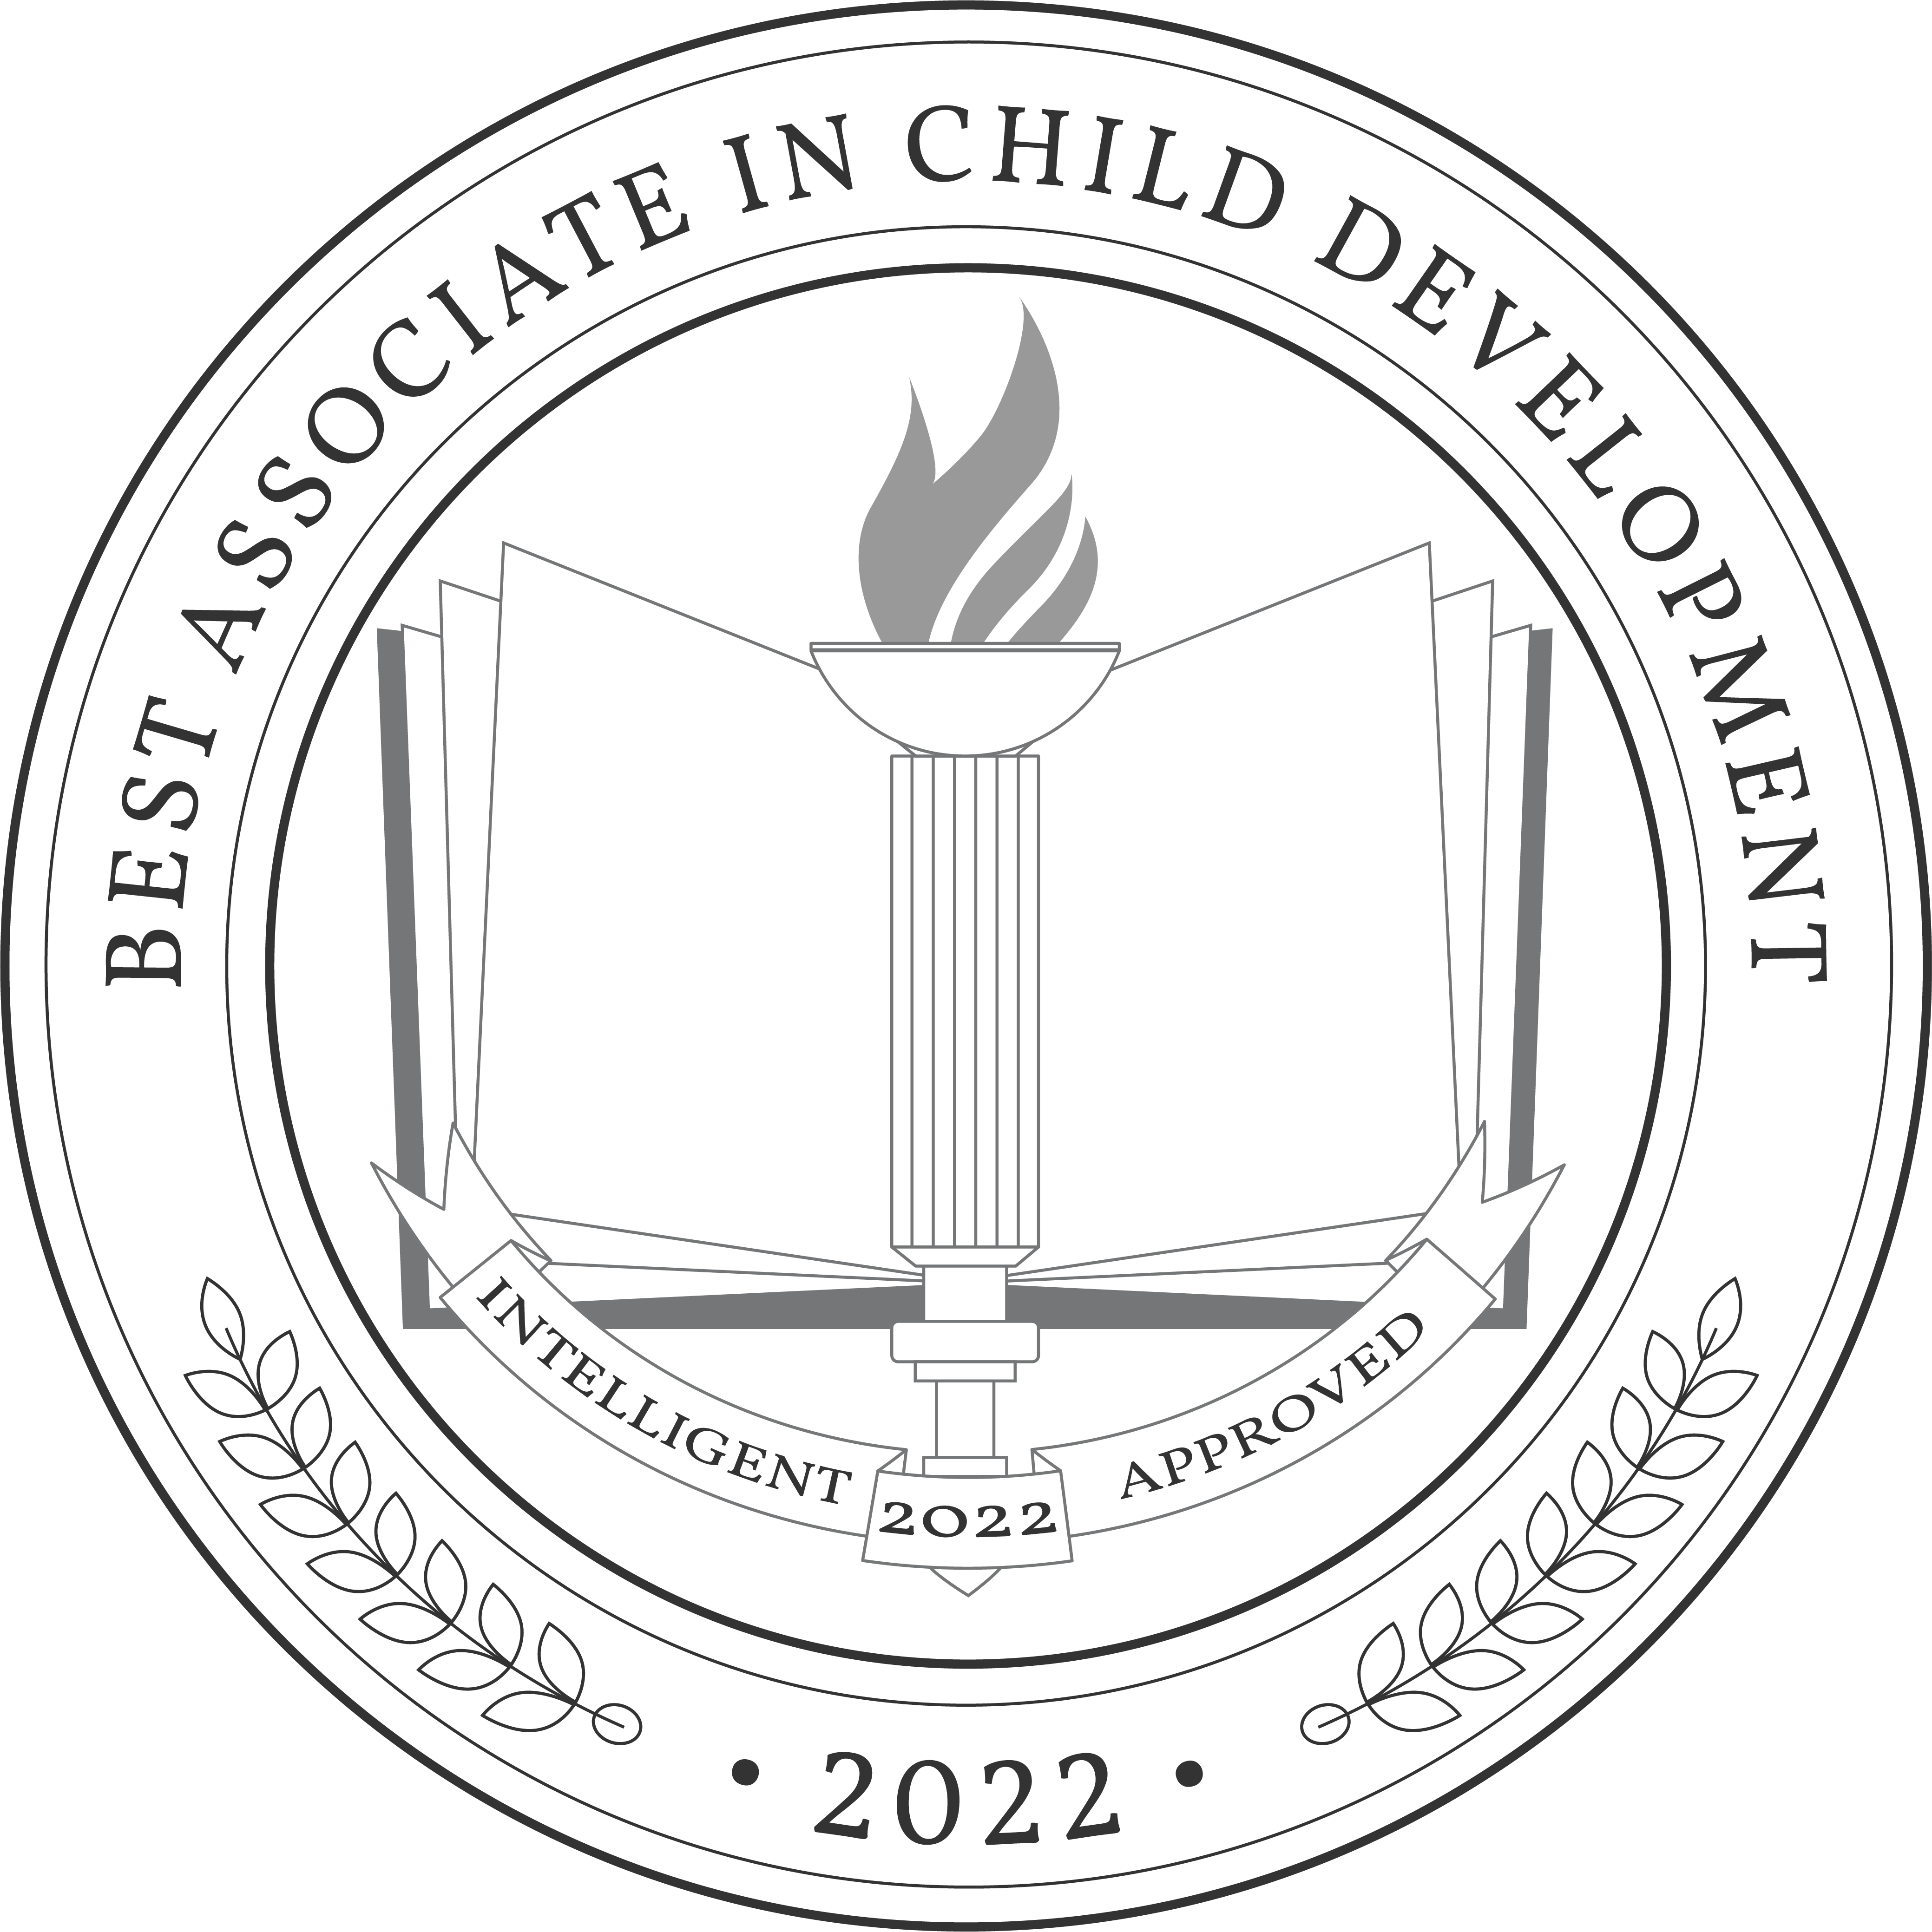 Best Associate in Child Development Badge